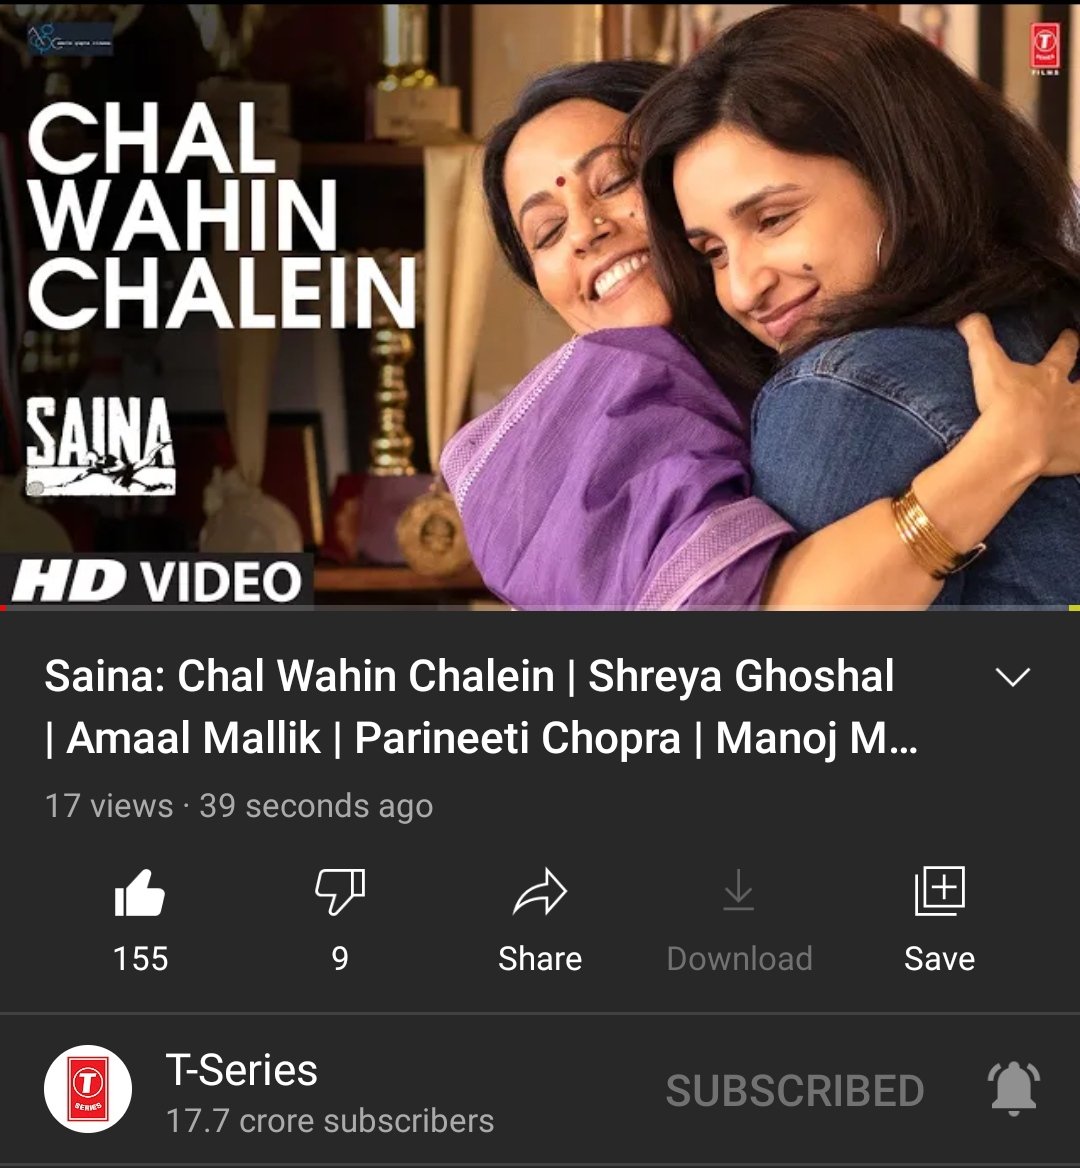 Another Melody Song From #Saina Titles as #ChalWahinChalein Out Now🎶 

Singer : @shreyaghoshal Mam 
Music by : @AmaalMallik 
Lyrics : @manojmuntashir